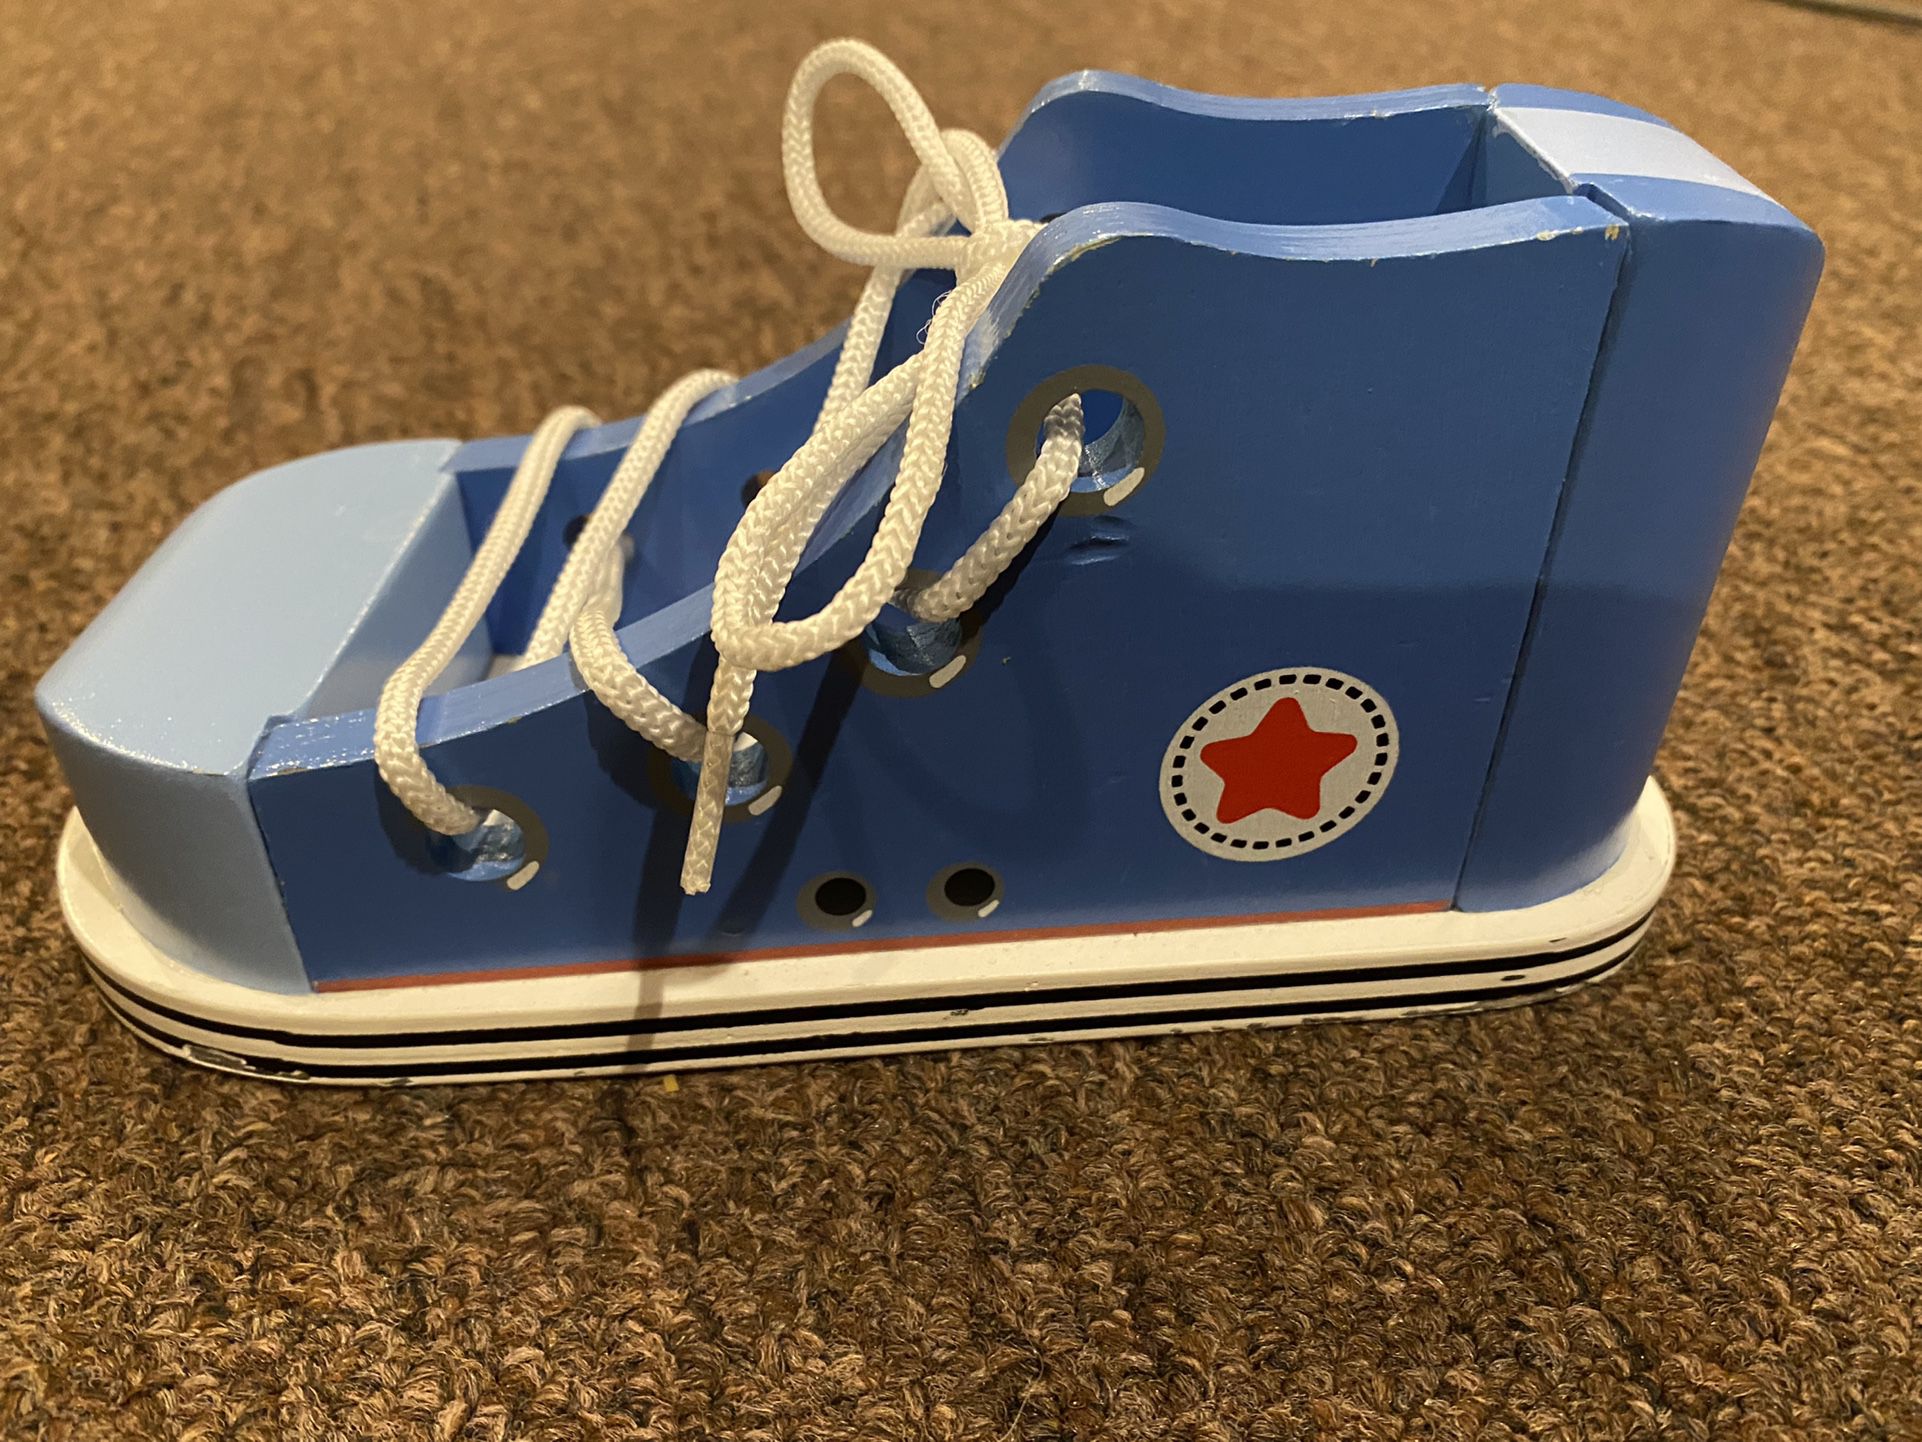 Cool Kicks Single Blue Lacing Sneaker Wooden Toy for Kids Learning Shoe Tying